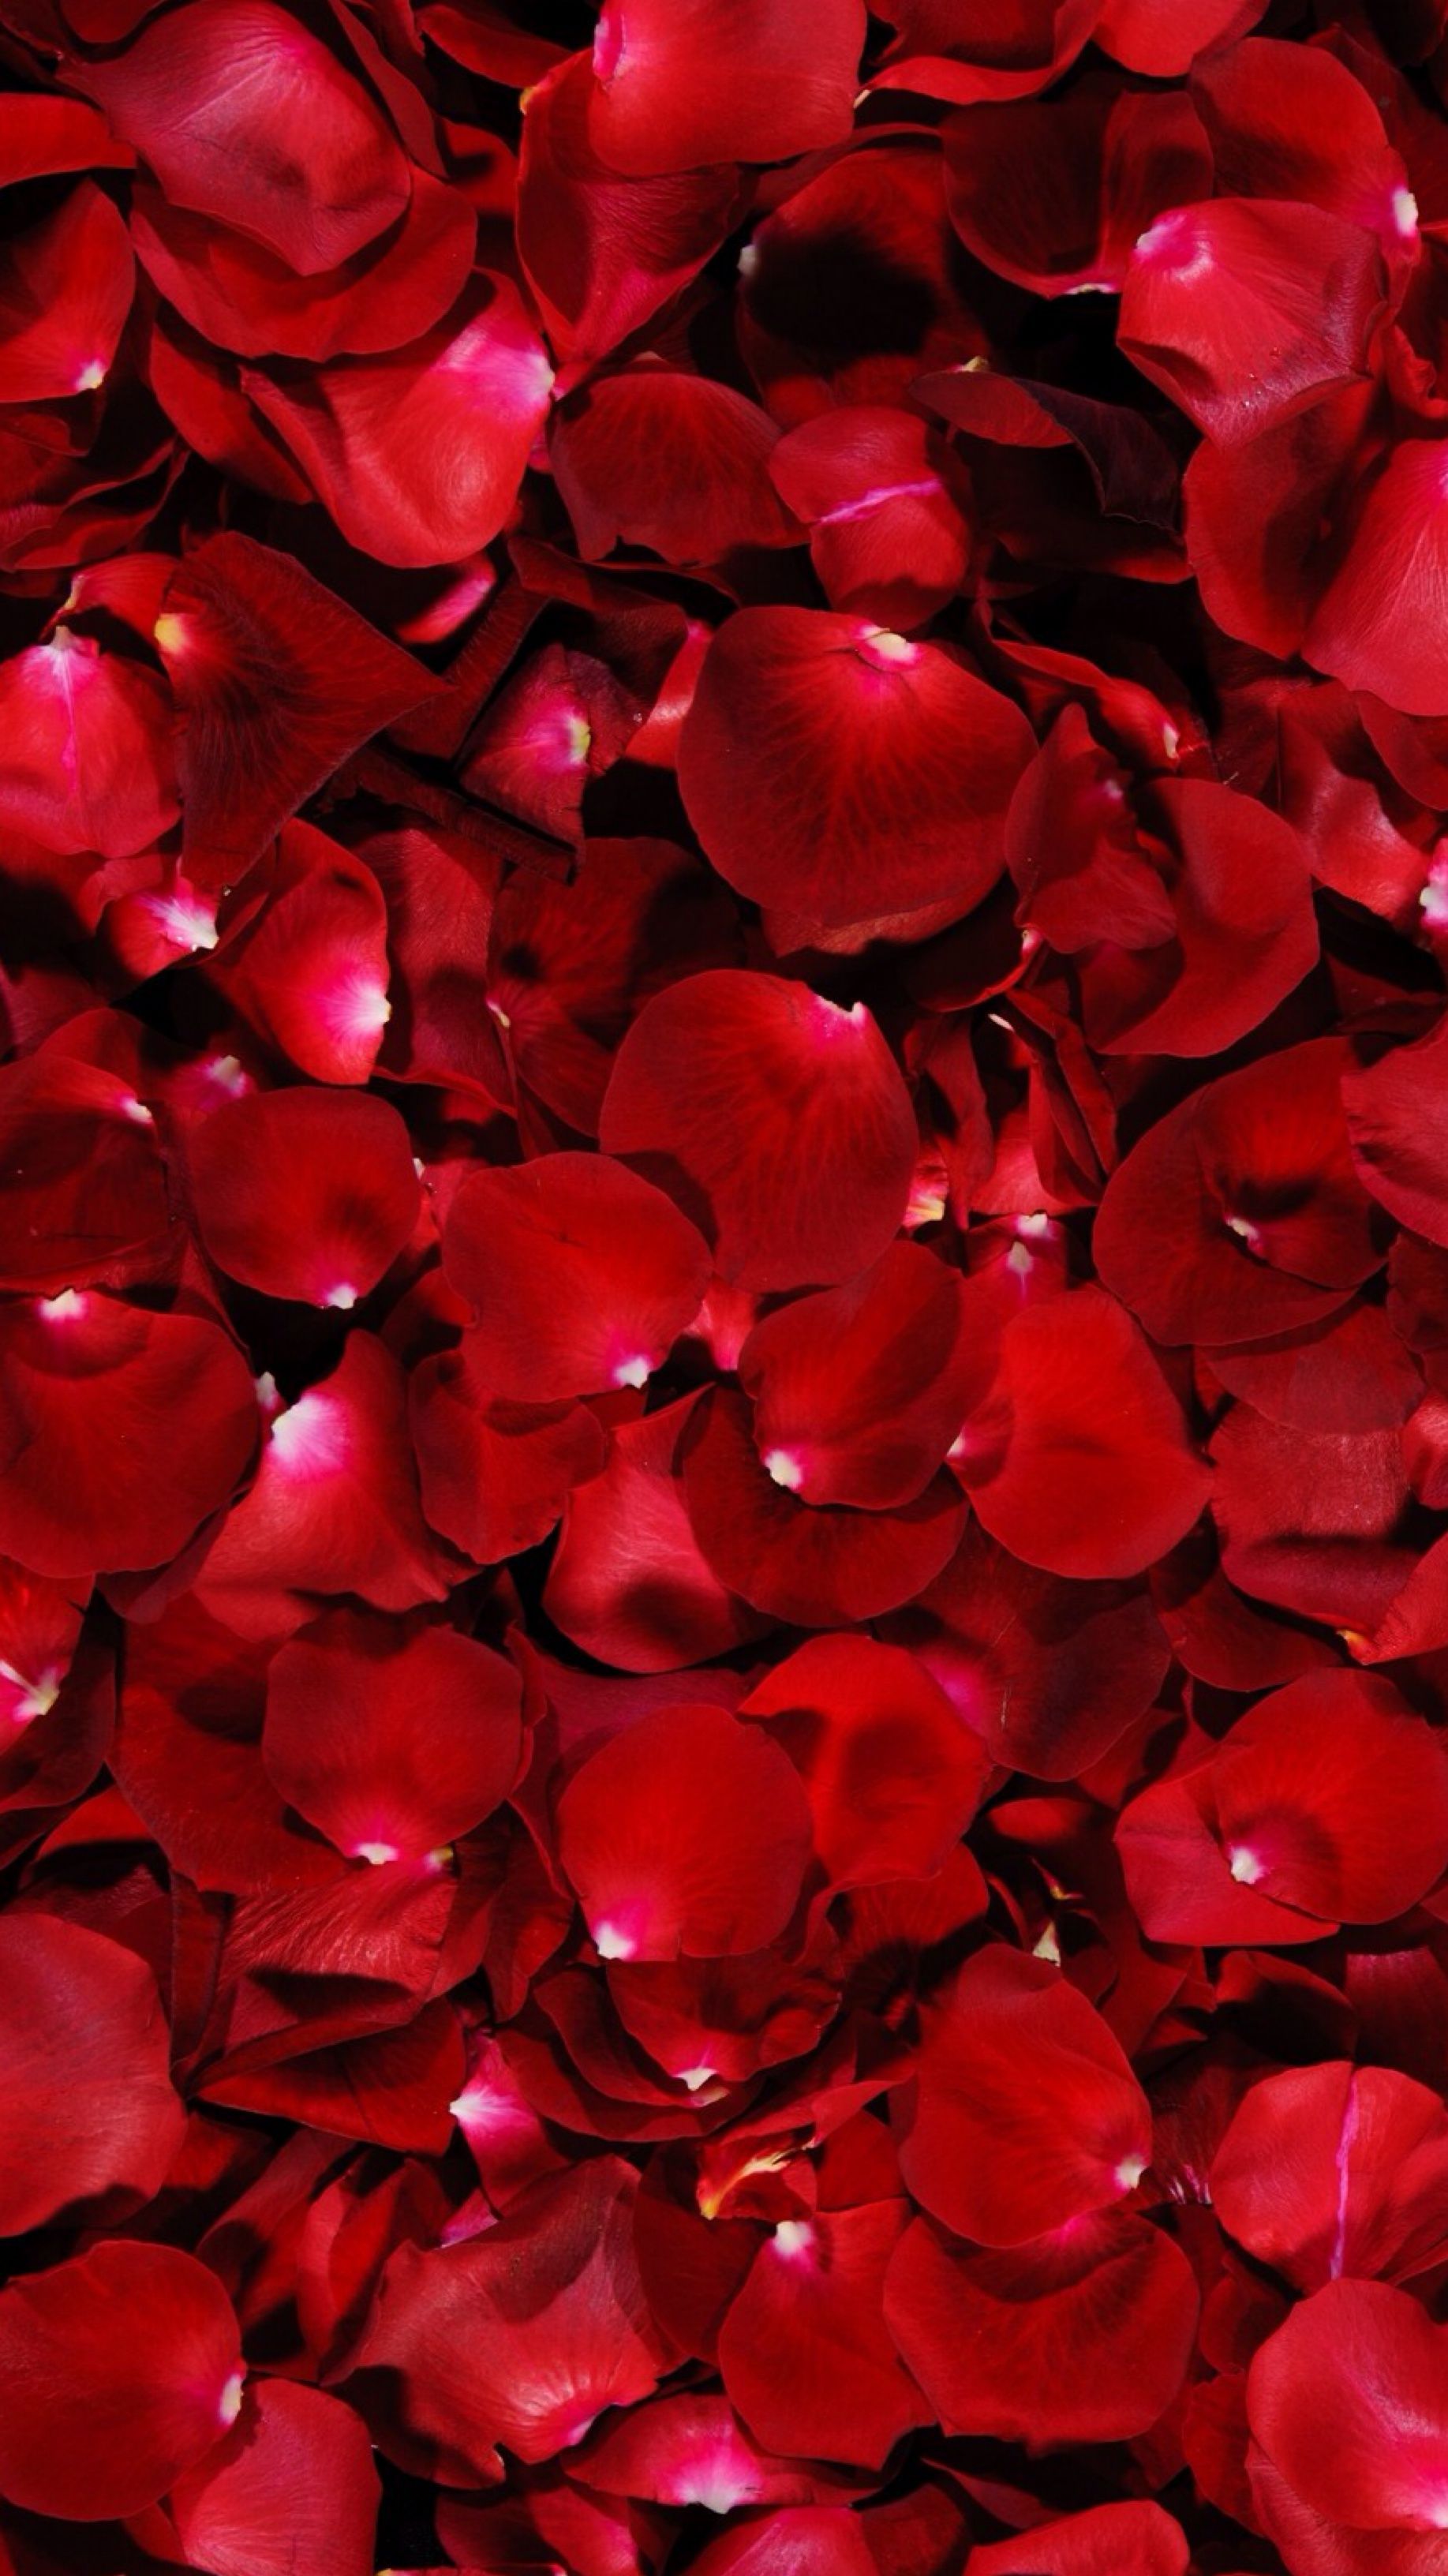 Red rose petals // wallpaper. Red rose petals, Red aesthetic, Red petals